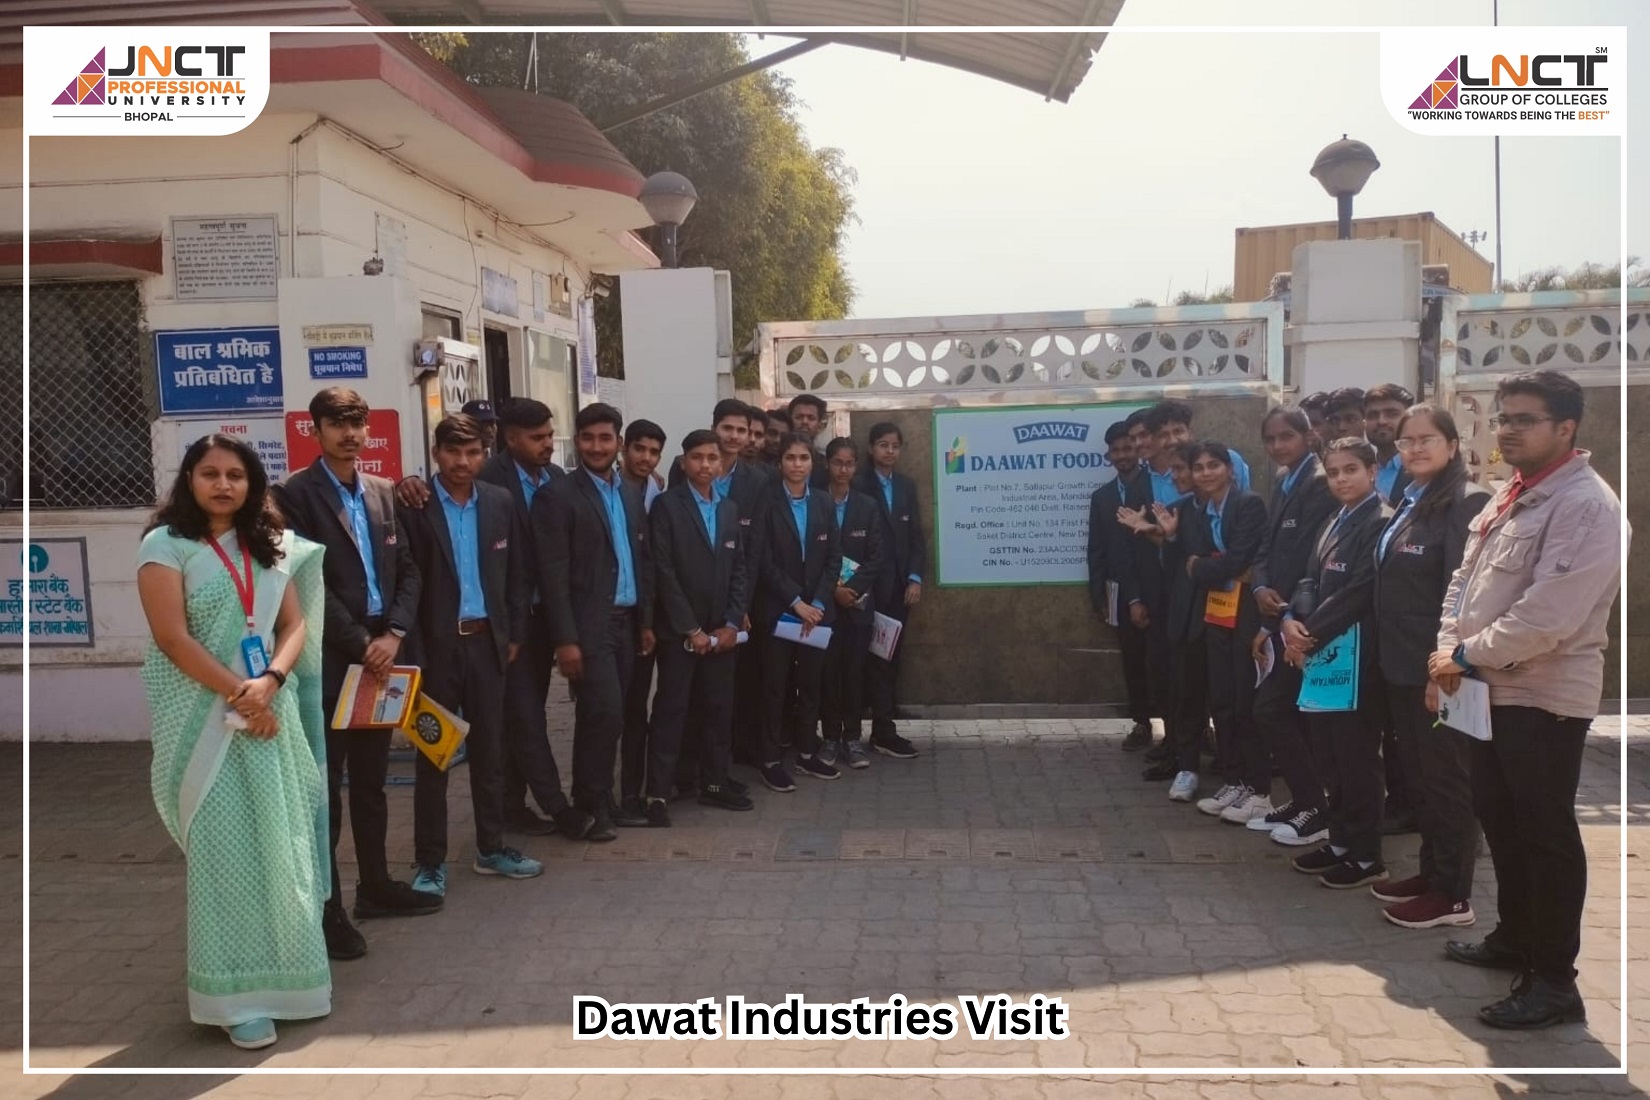 Industrial Visit Recap: Dawat Industries